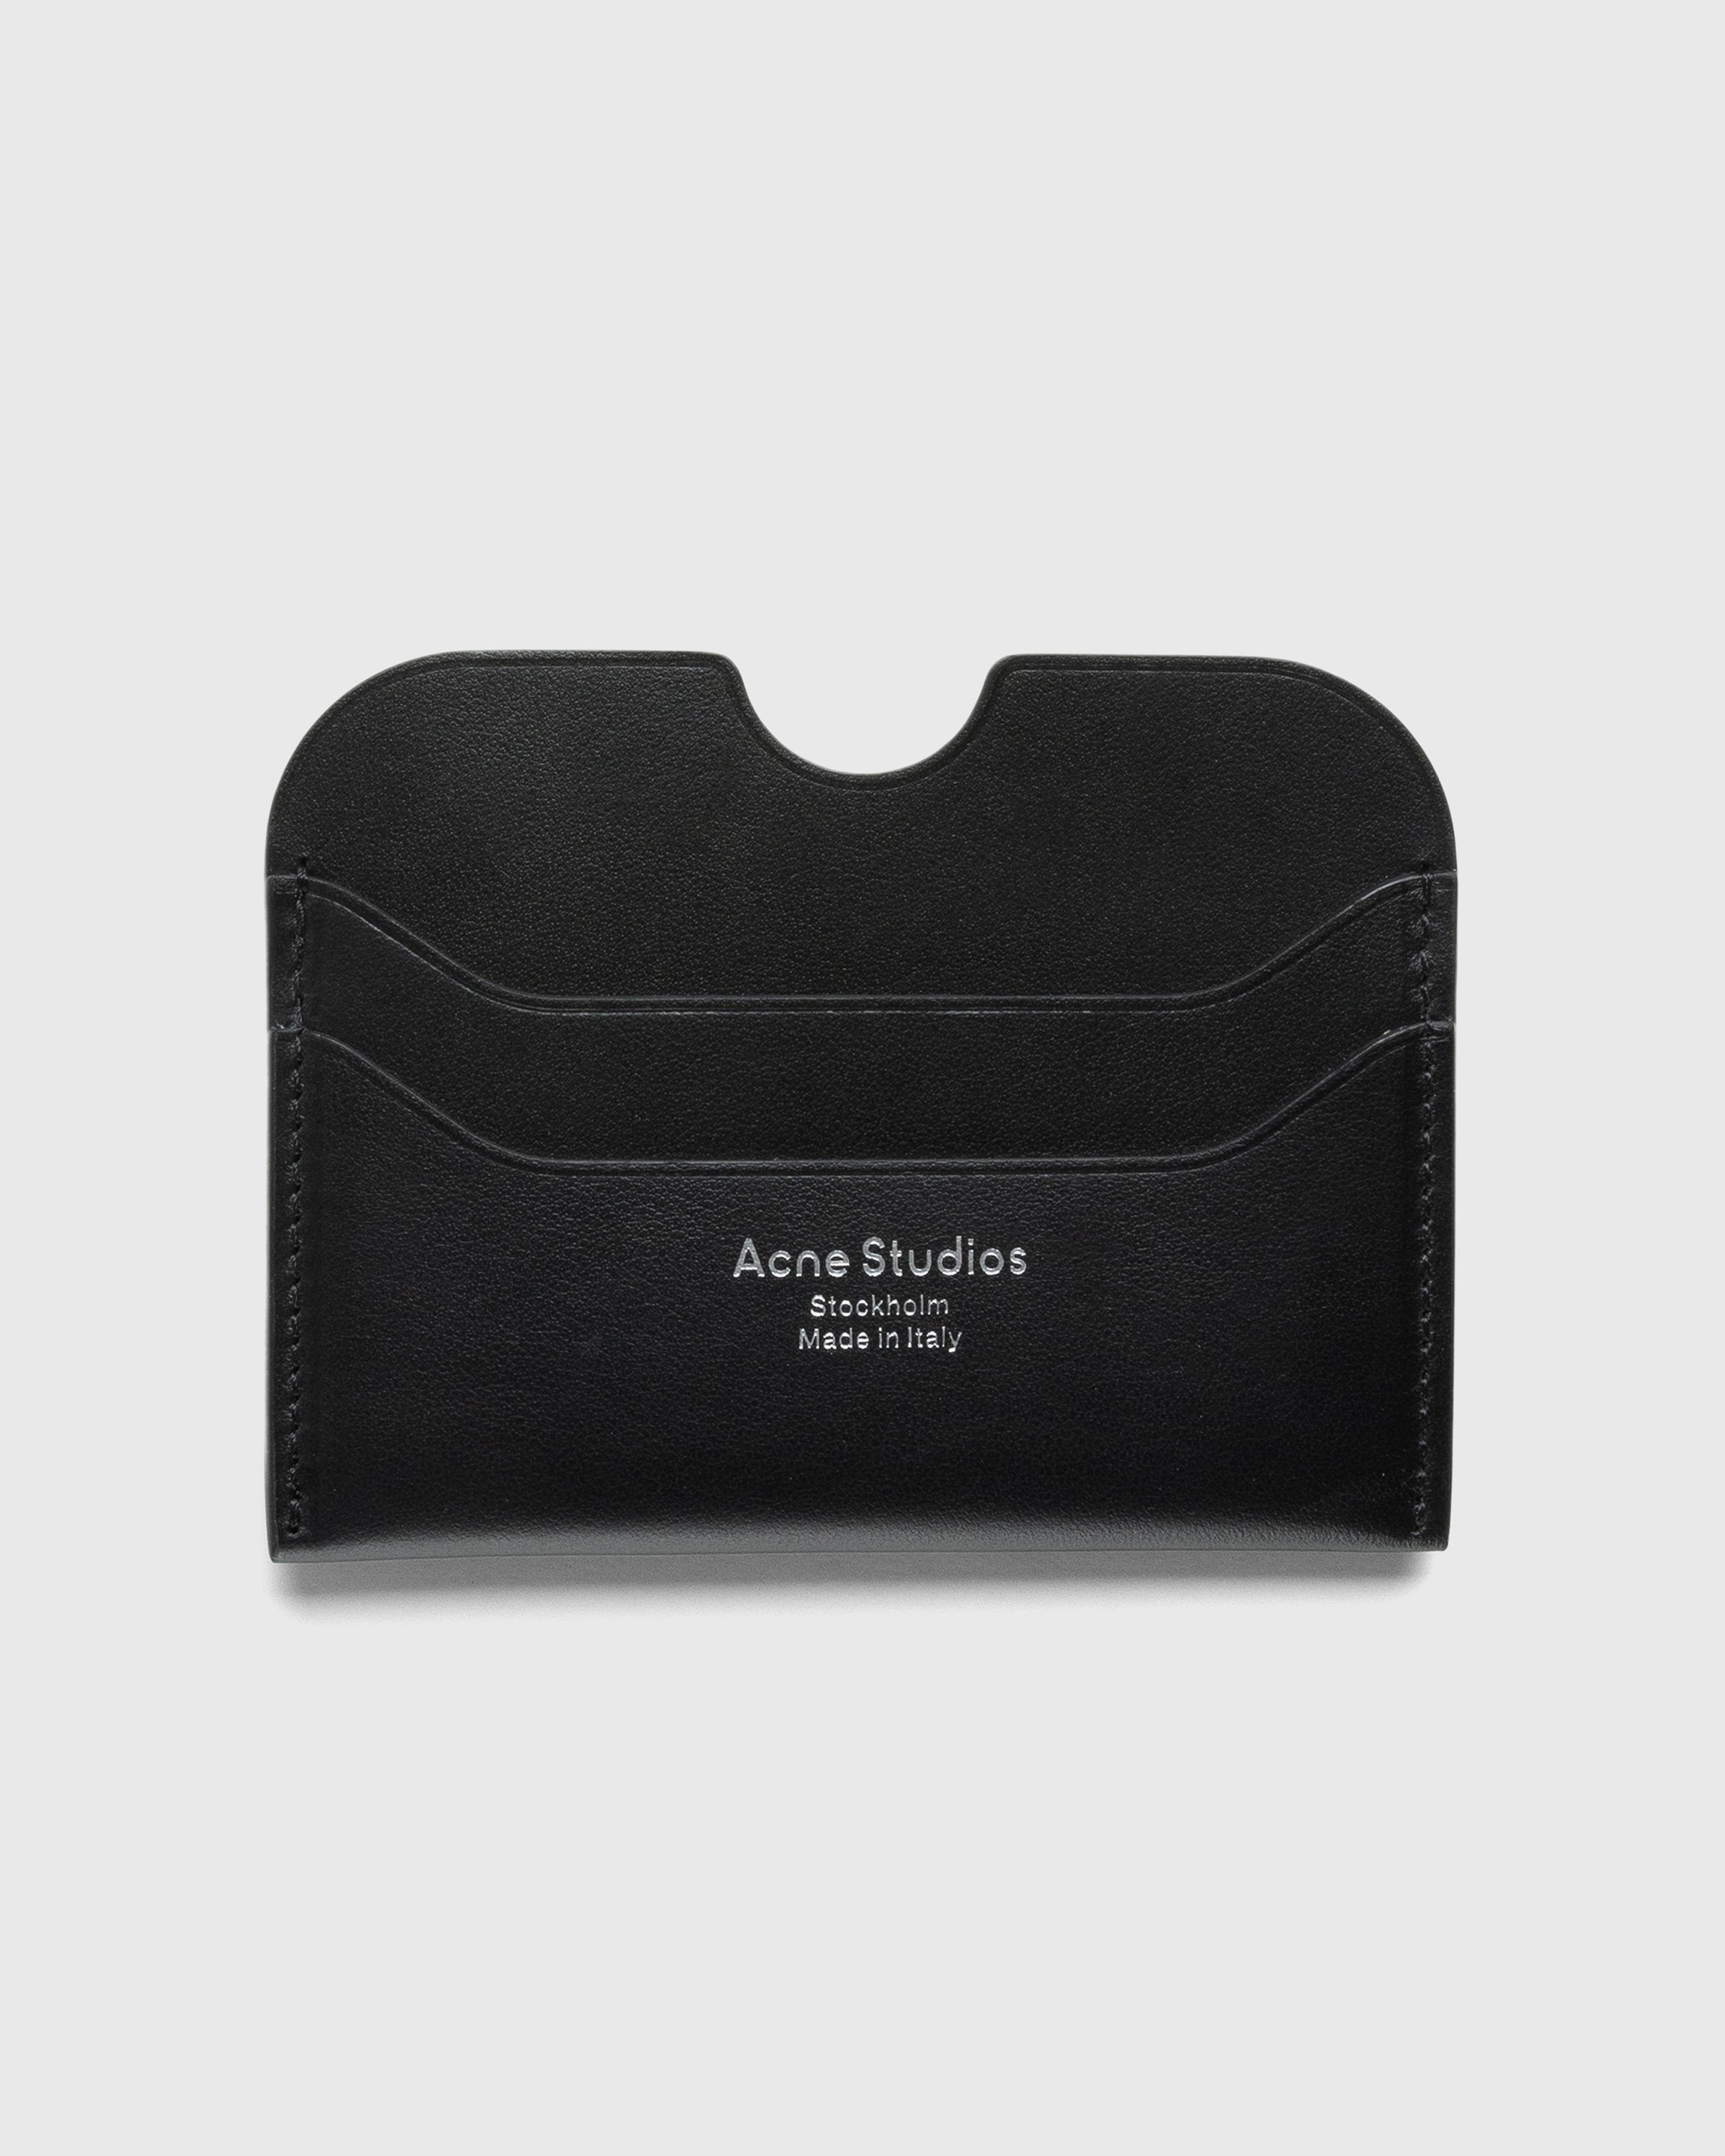 Acne Studios - Leather Card Holder Black - Accessories - Black - Image 1